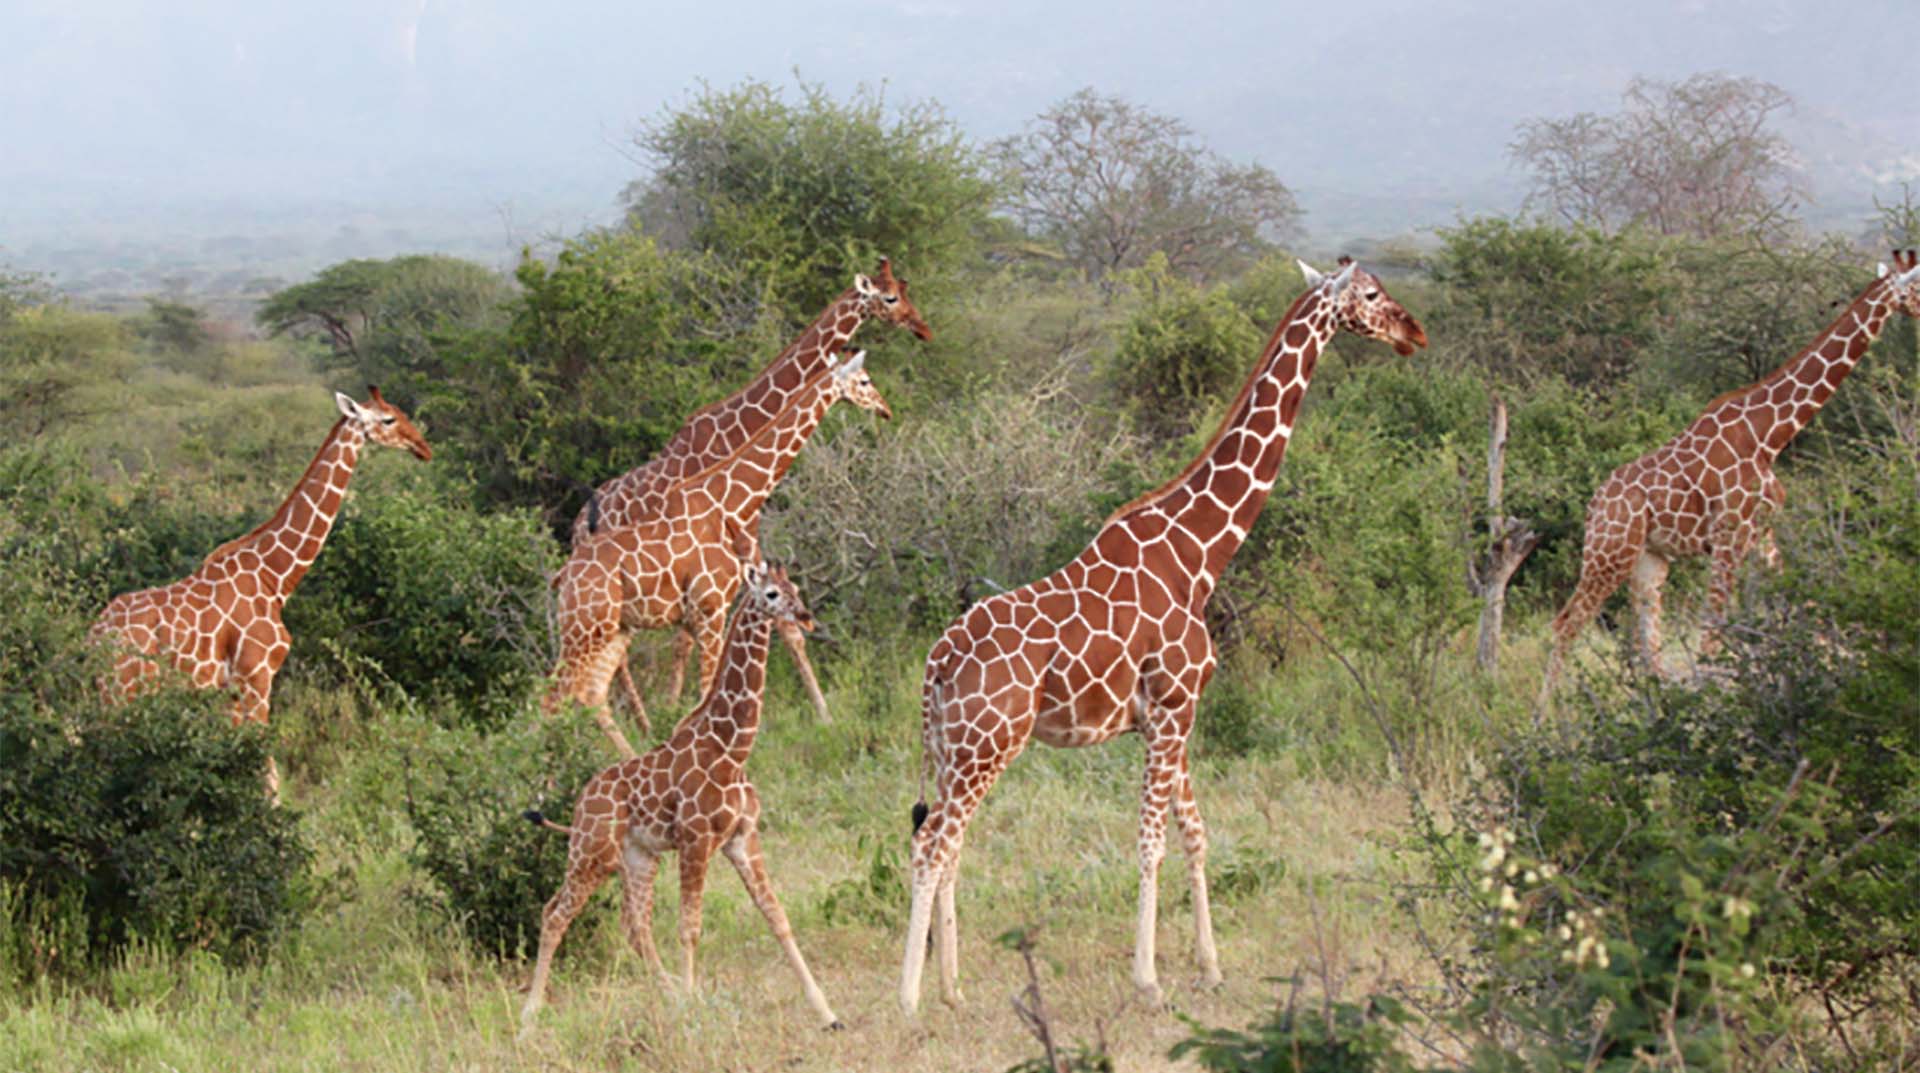 Giraffe | San Diego Zoo Animals & Plants